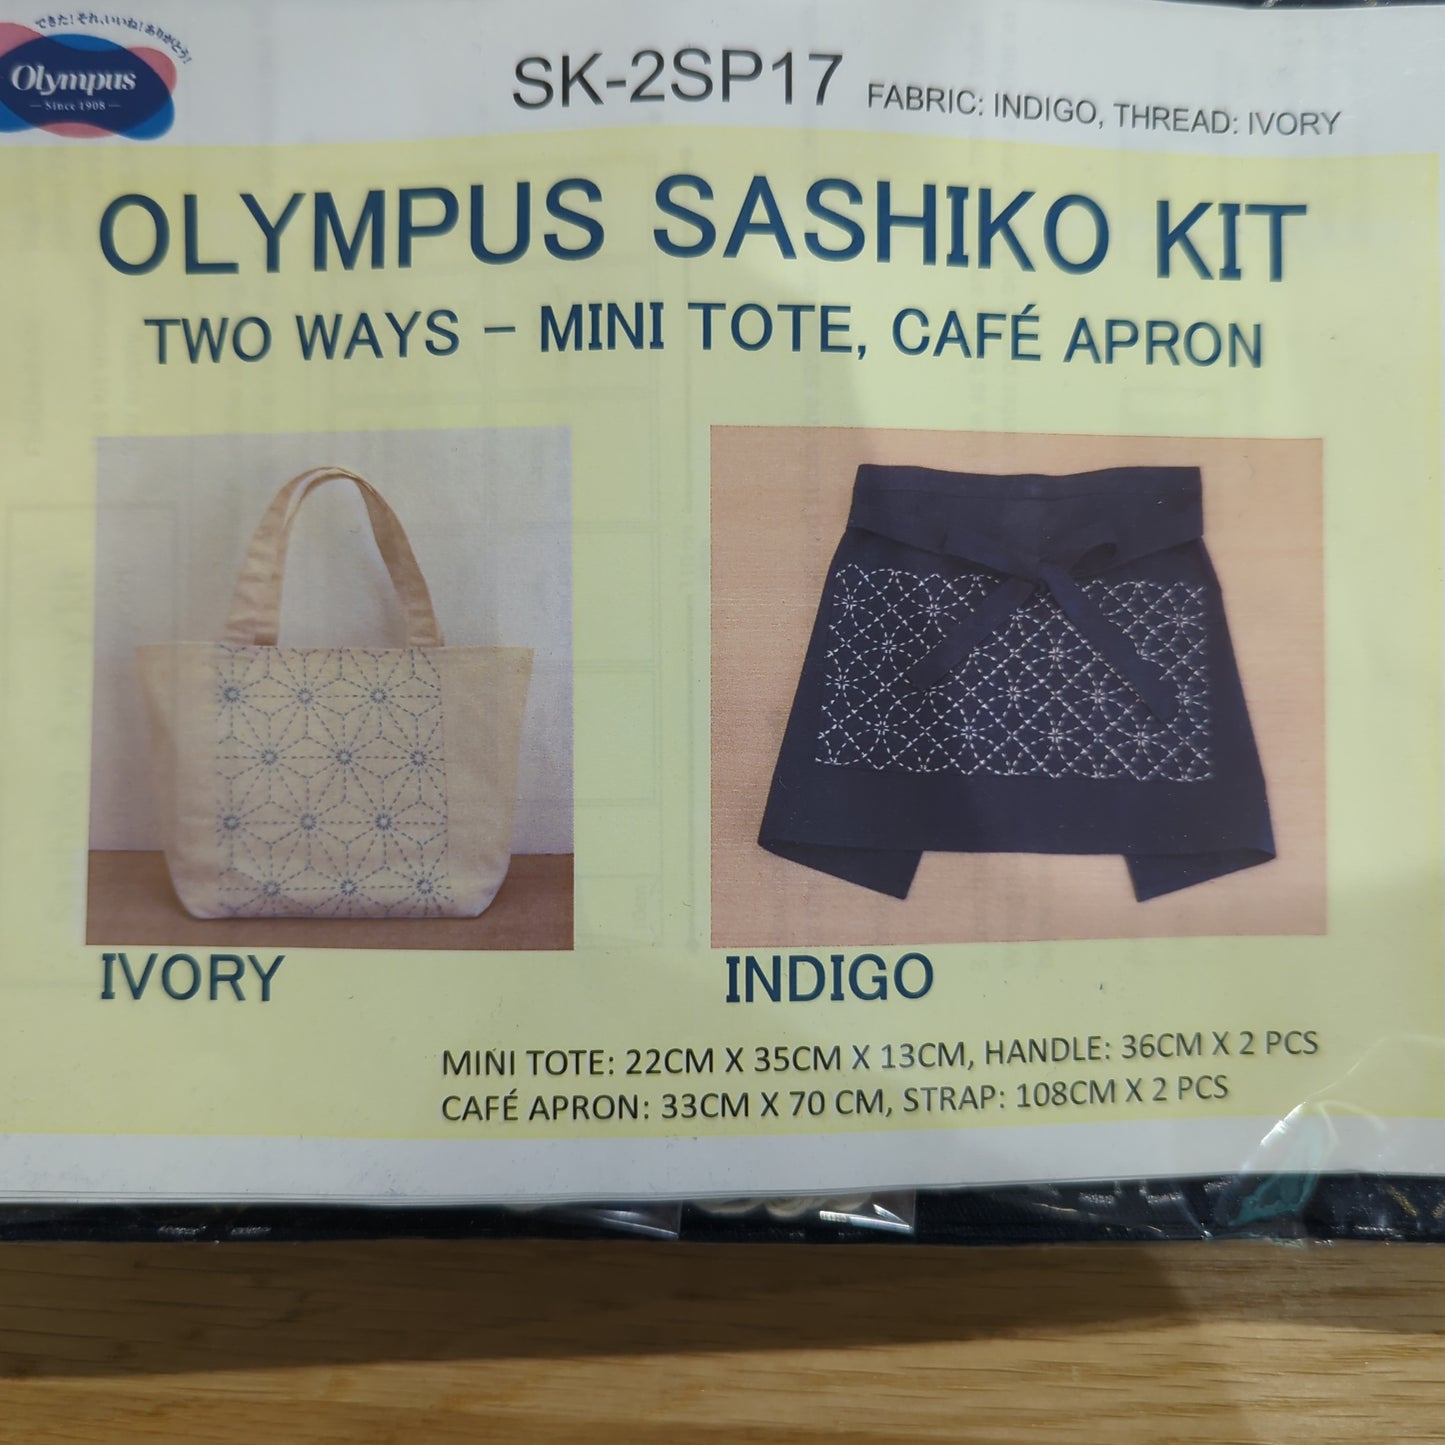 Olympus Sashiko Kit - Mini Tote Bag / Cafe Apron